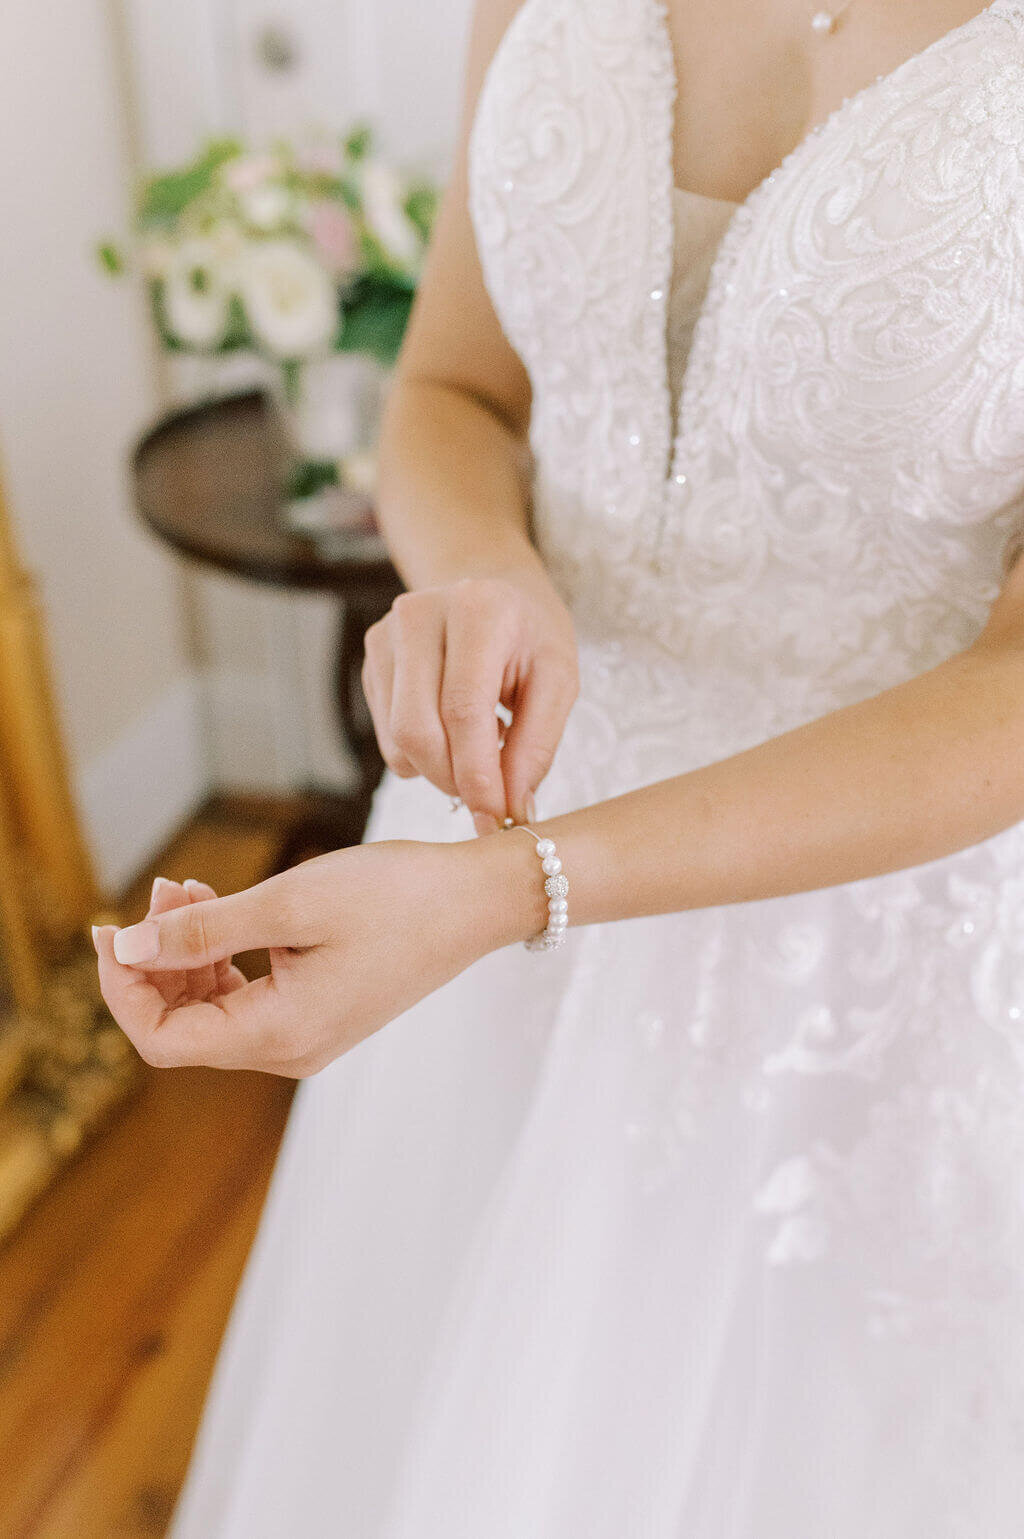 bride adjusting bracelet during getting ready photos